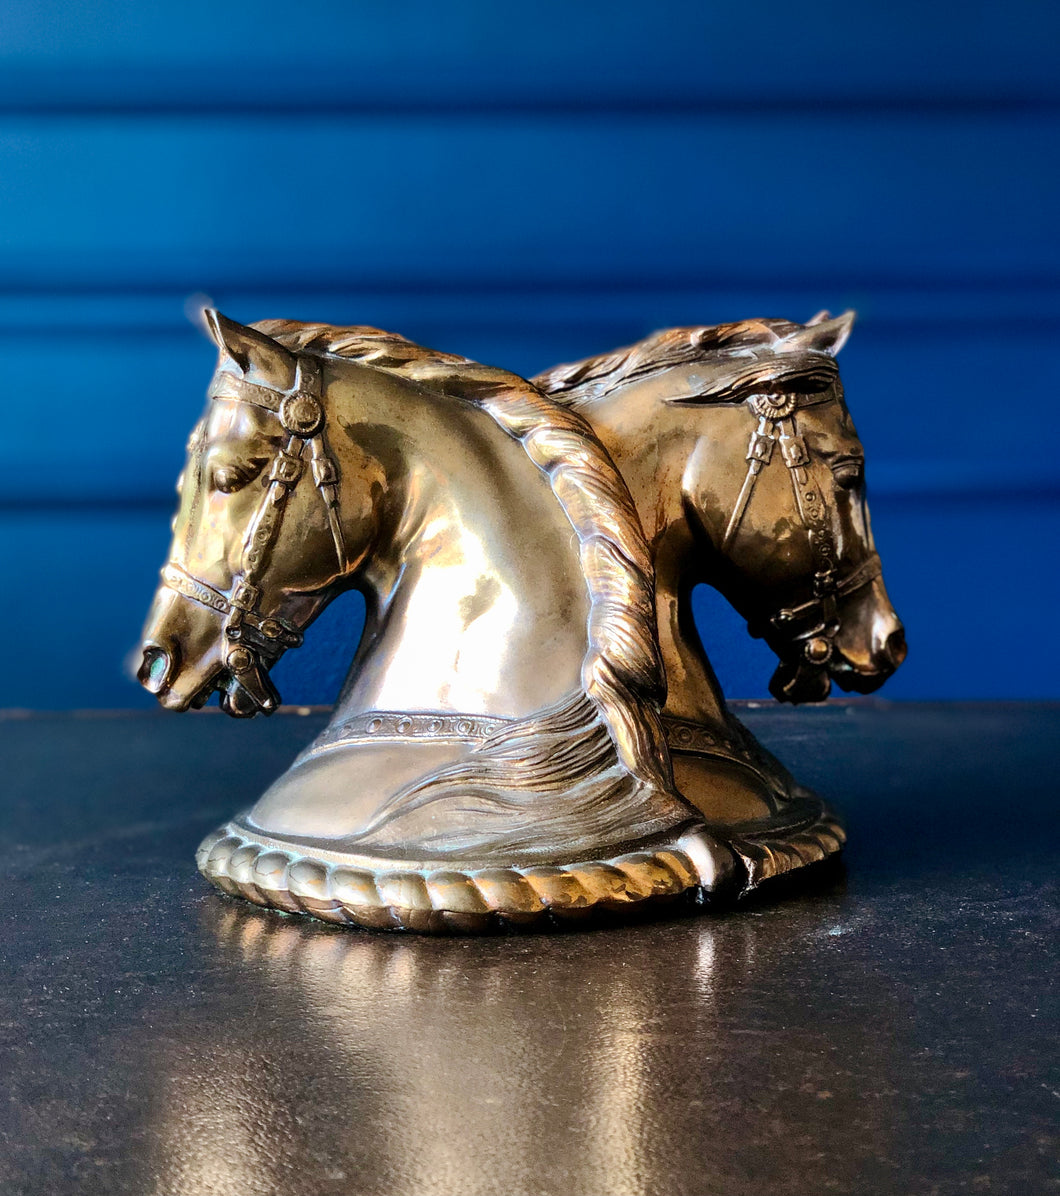 Brass Horse Head Bookend – Jefferson Brass Company